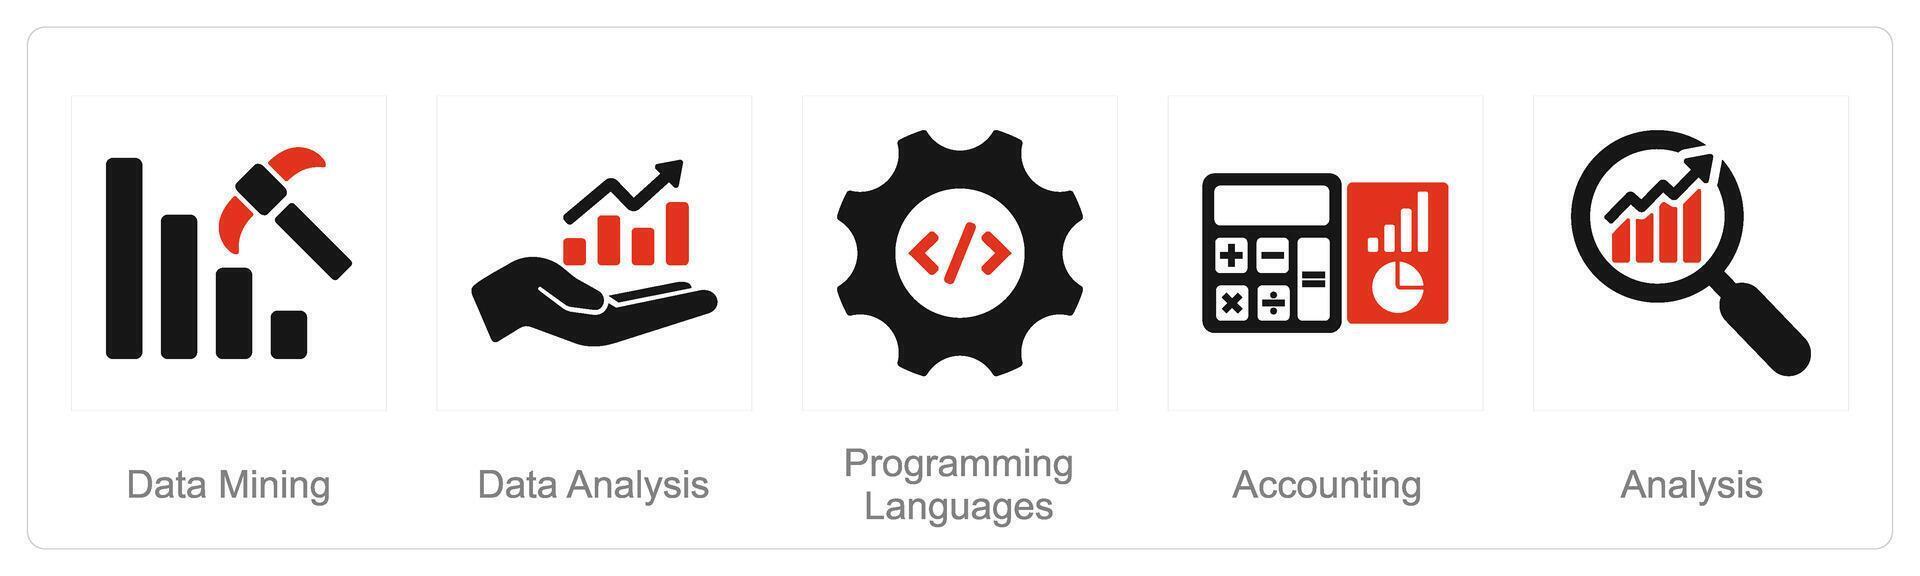 A set of 5 Hard Skills icons as data mining, data analysis, programming languages vector